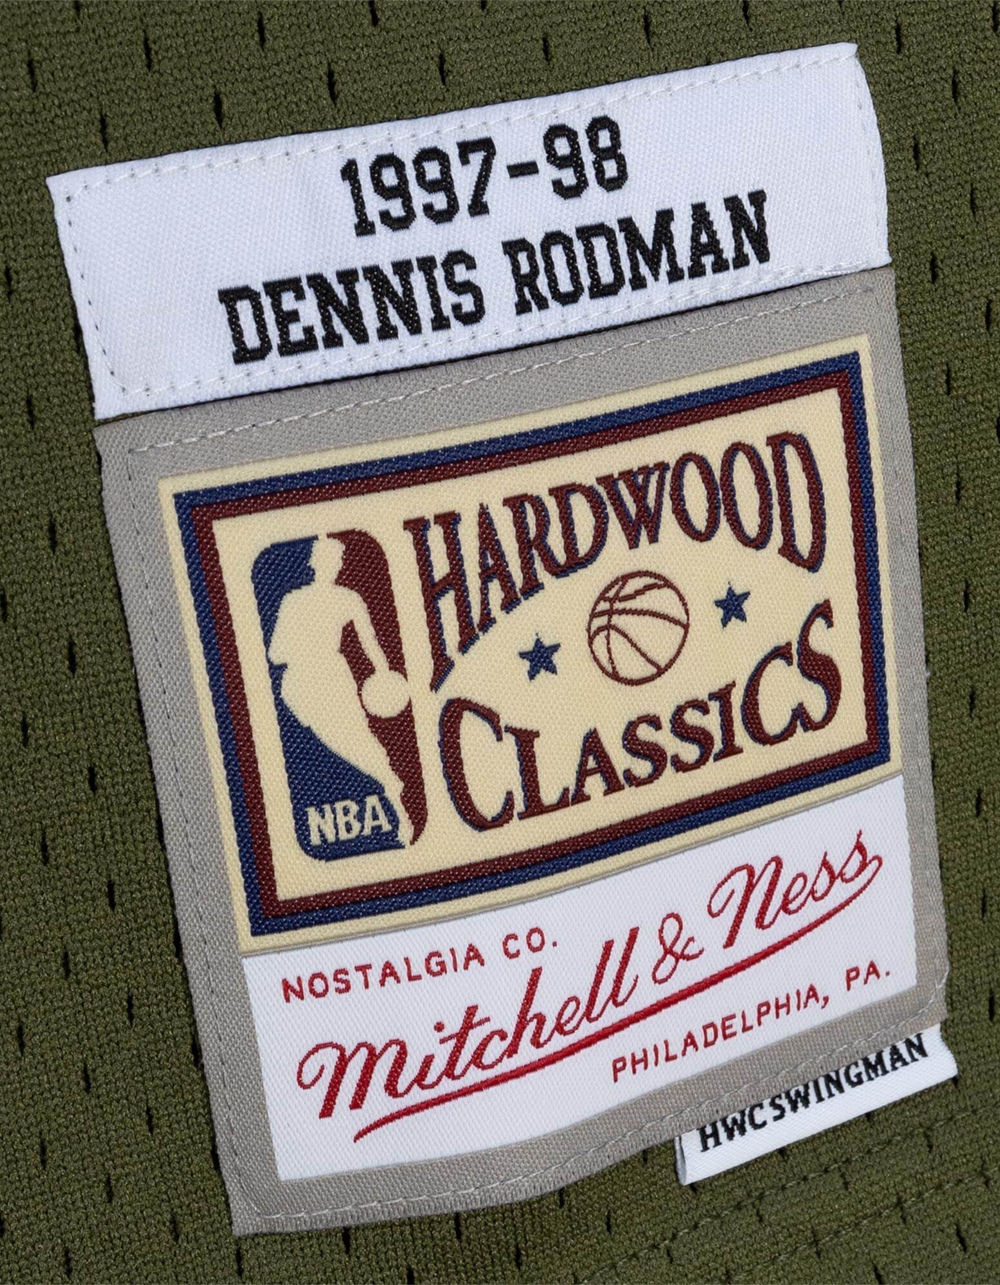  Mitchell & Ness Dennis Rodman Chicago Bulls Swingman Jersey  Black (Small) : Sports & Outdoors